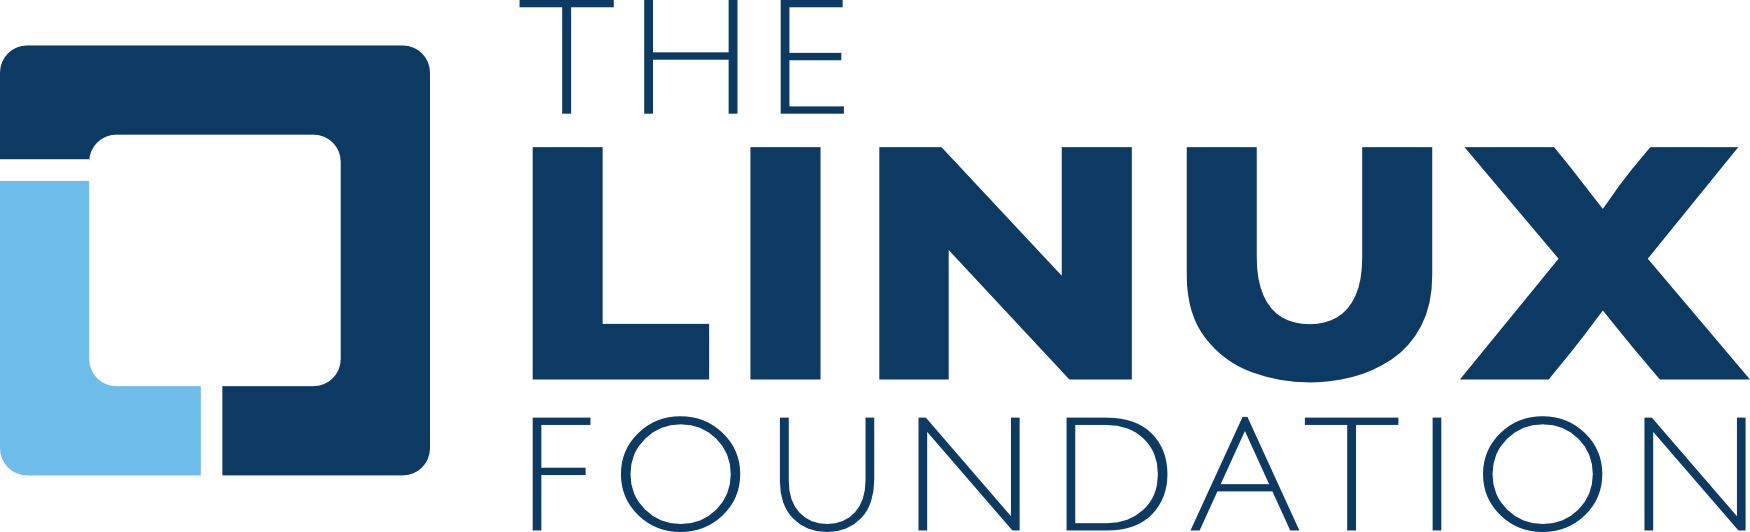 Original Linux Logo - File:Linux Foundation logo.png - Wikimedia Commons